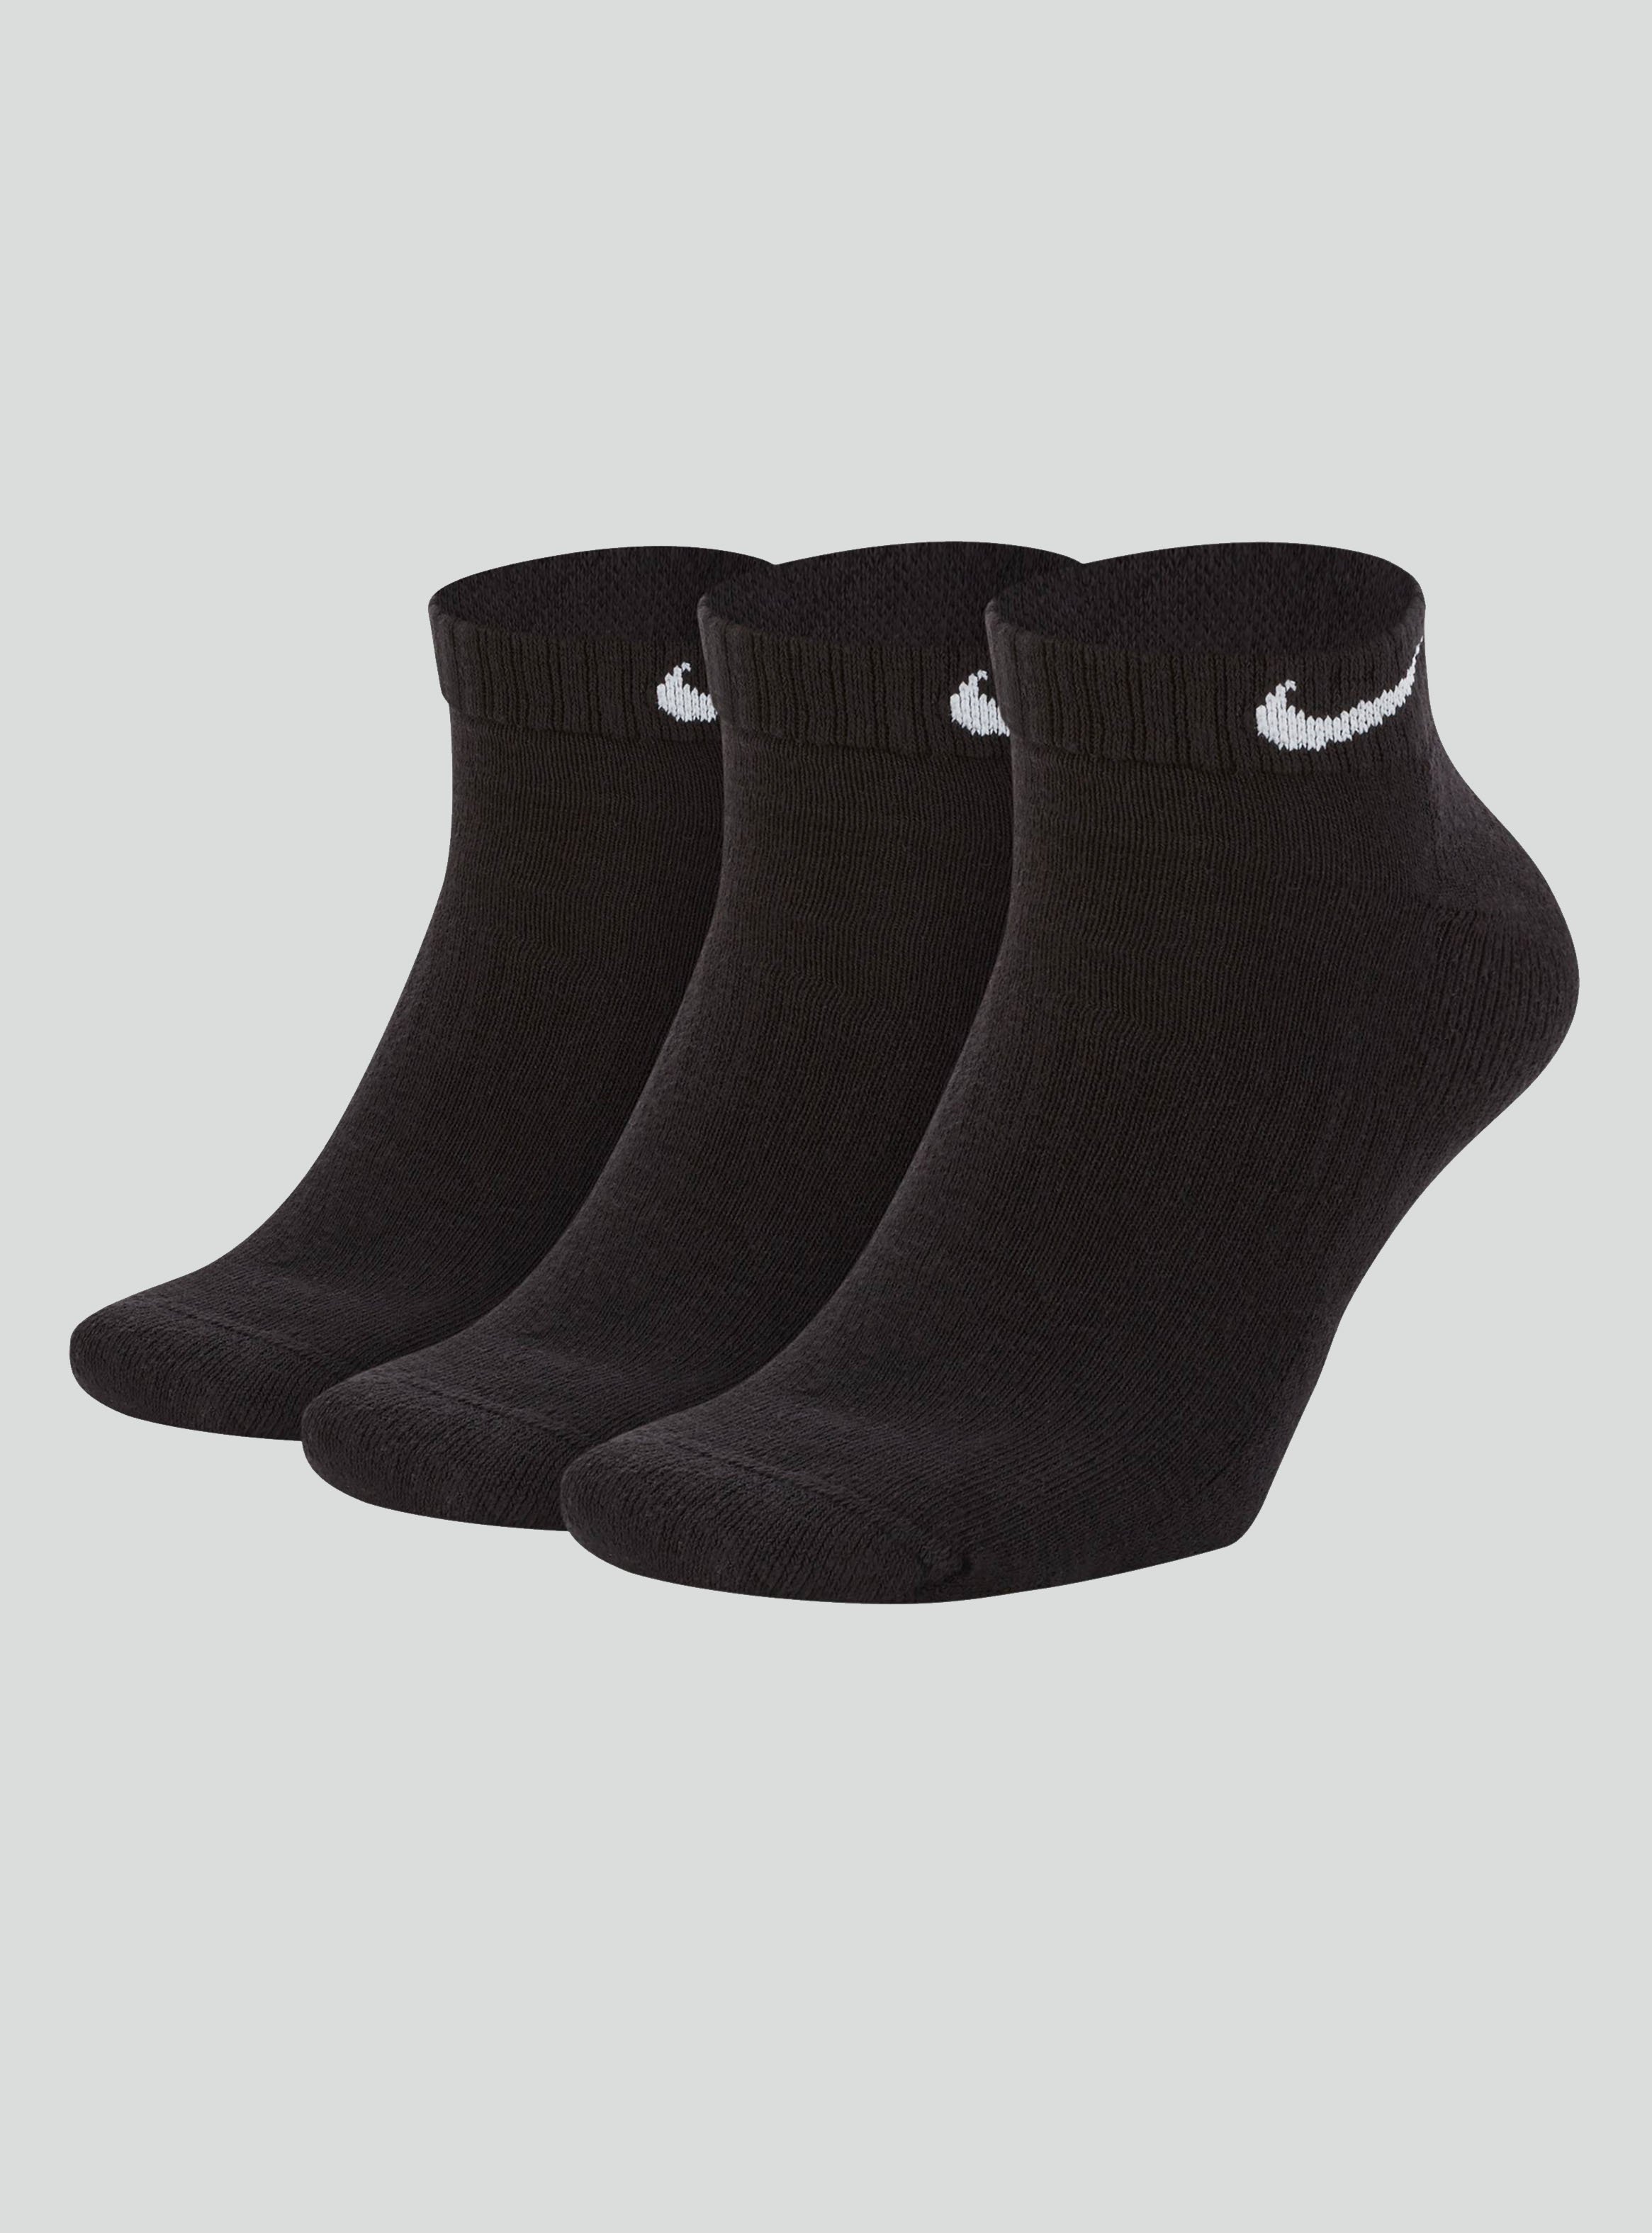 Peatonal Dime Disfraces Calcetines Nike Everday Cush Low Pack 3 Negro - Accesorios | Paris.cl